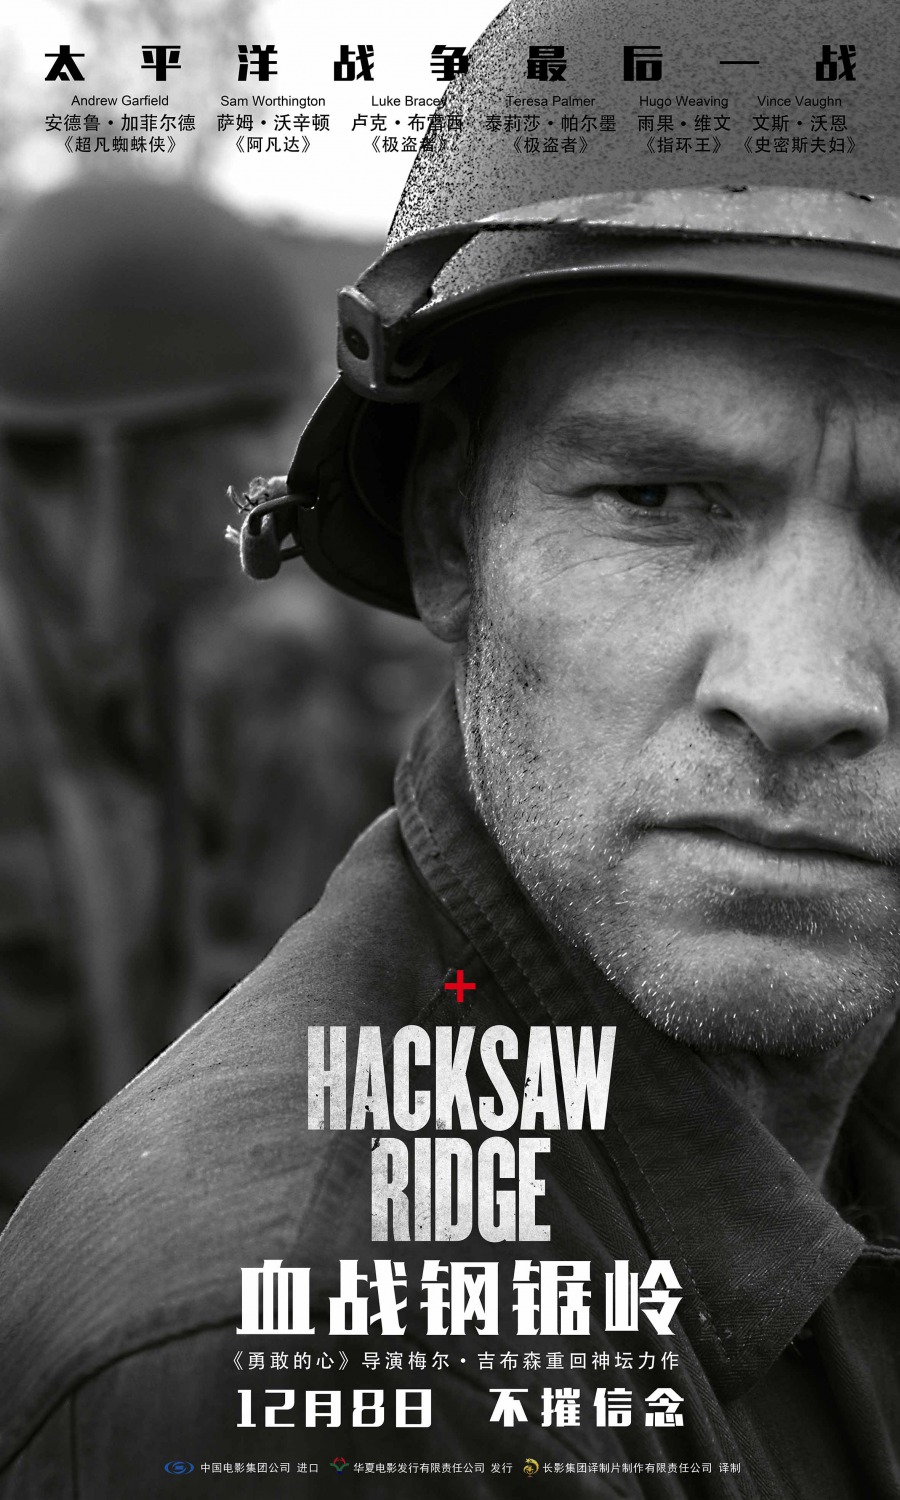 Extra Large Movie Poster Image for Hacksaw Ridge (#14 of 19)